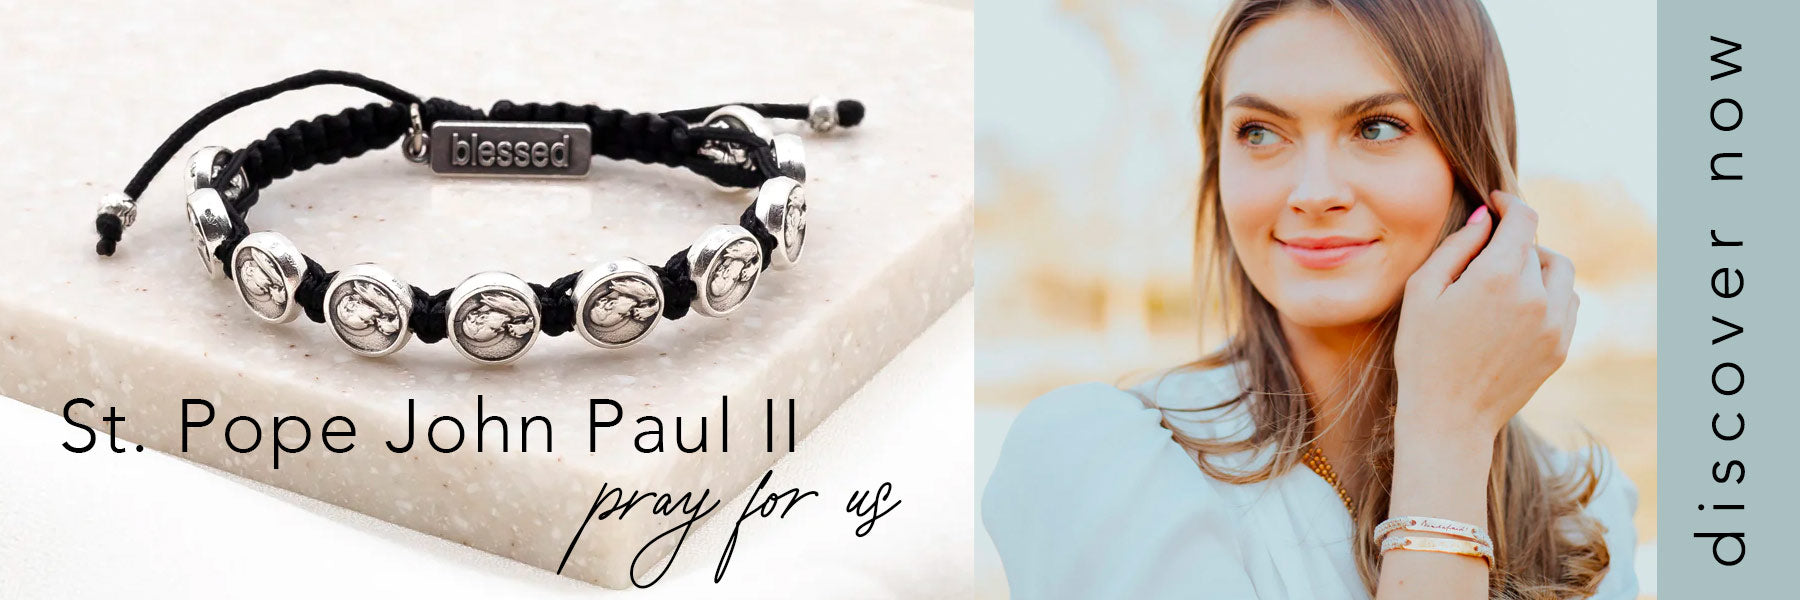 St. Pope John Paul II bracelet discover now product link